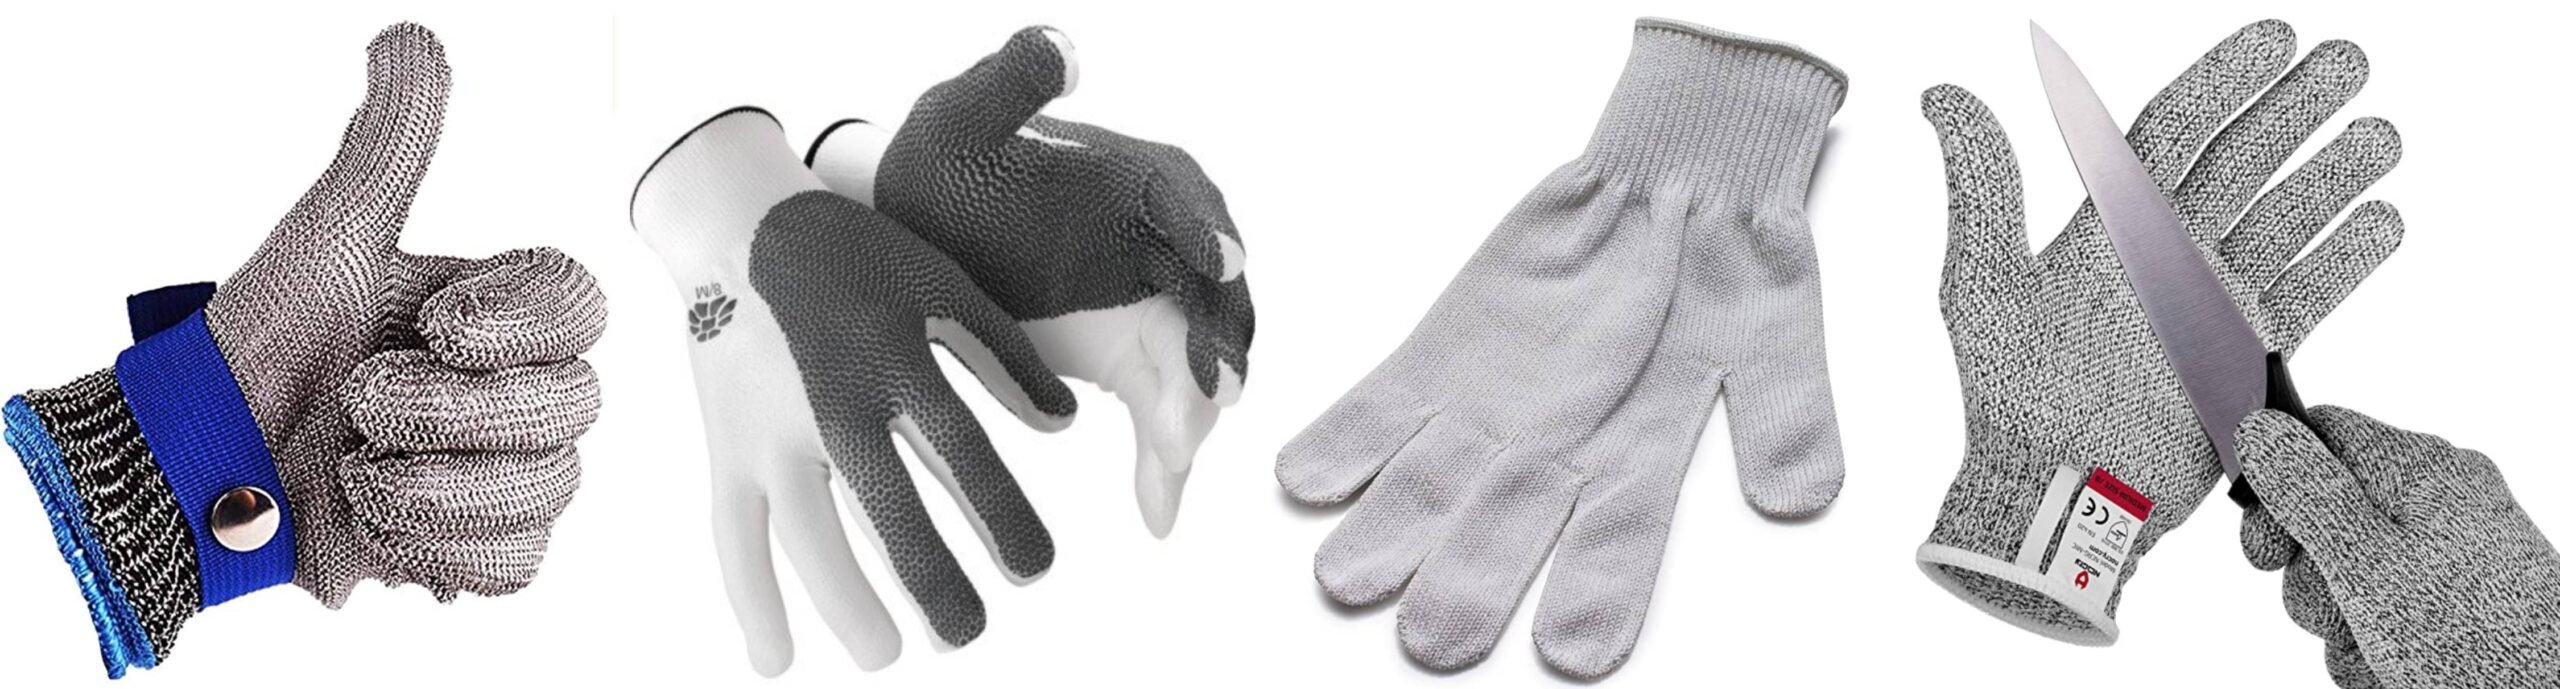 Cutproof Stab Resistant Stainless Steel Gloves Safety Metal Mesh Butcher Durable 